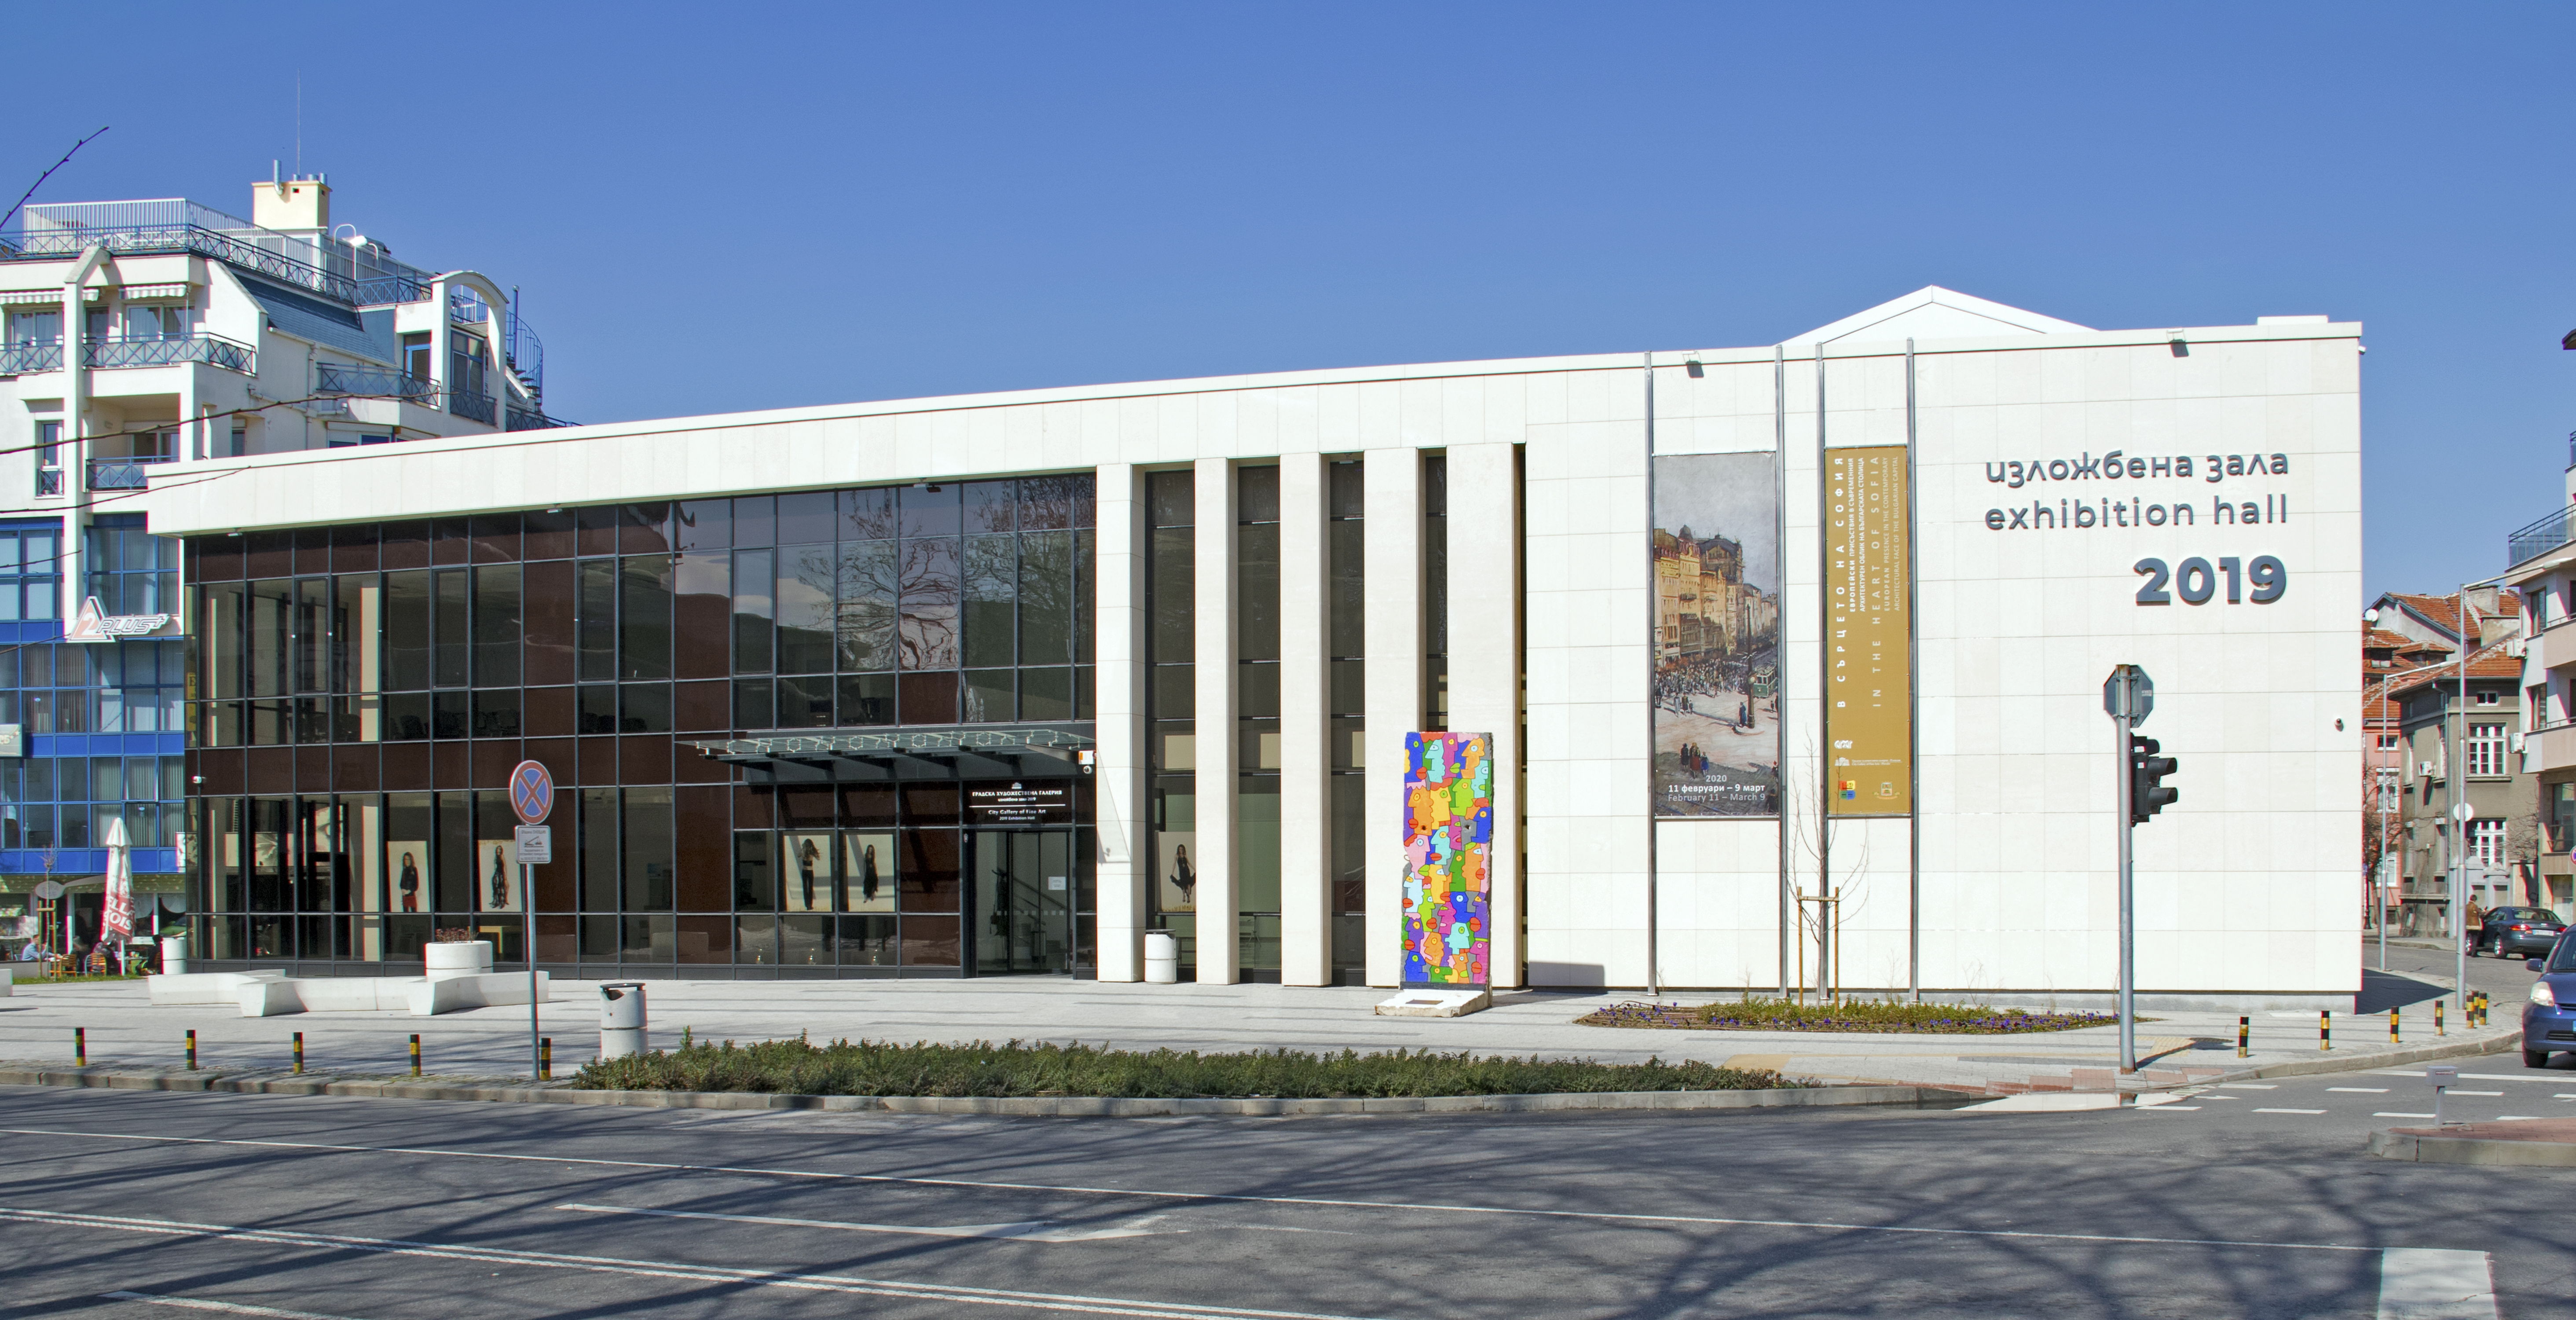 Exhibition Hall “2019” - City Art Gallery